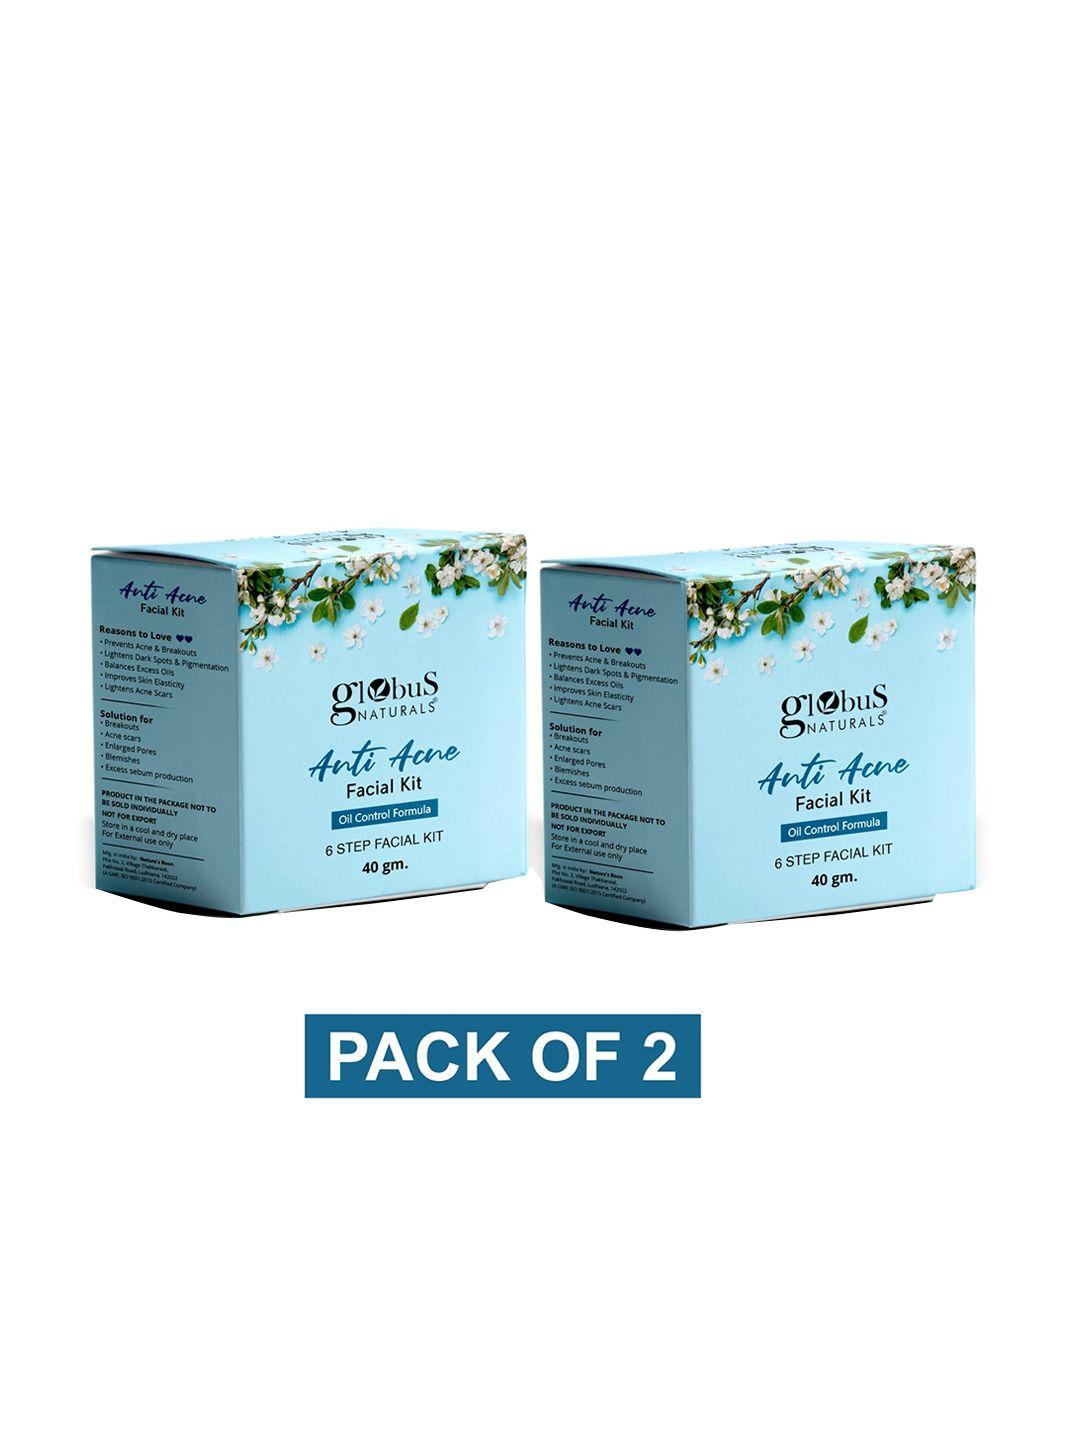 globus naturals set of 2 anti-acne facial kit with turmeric & neem oil - 40 g each